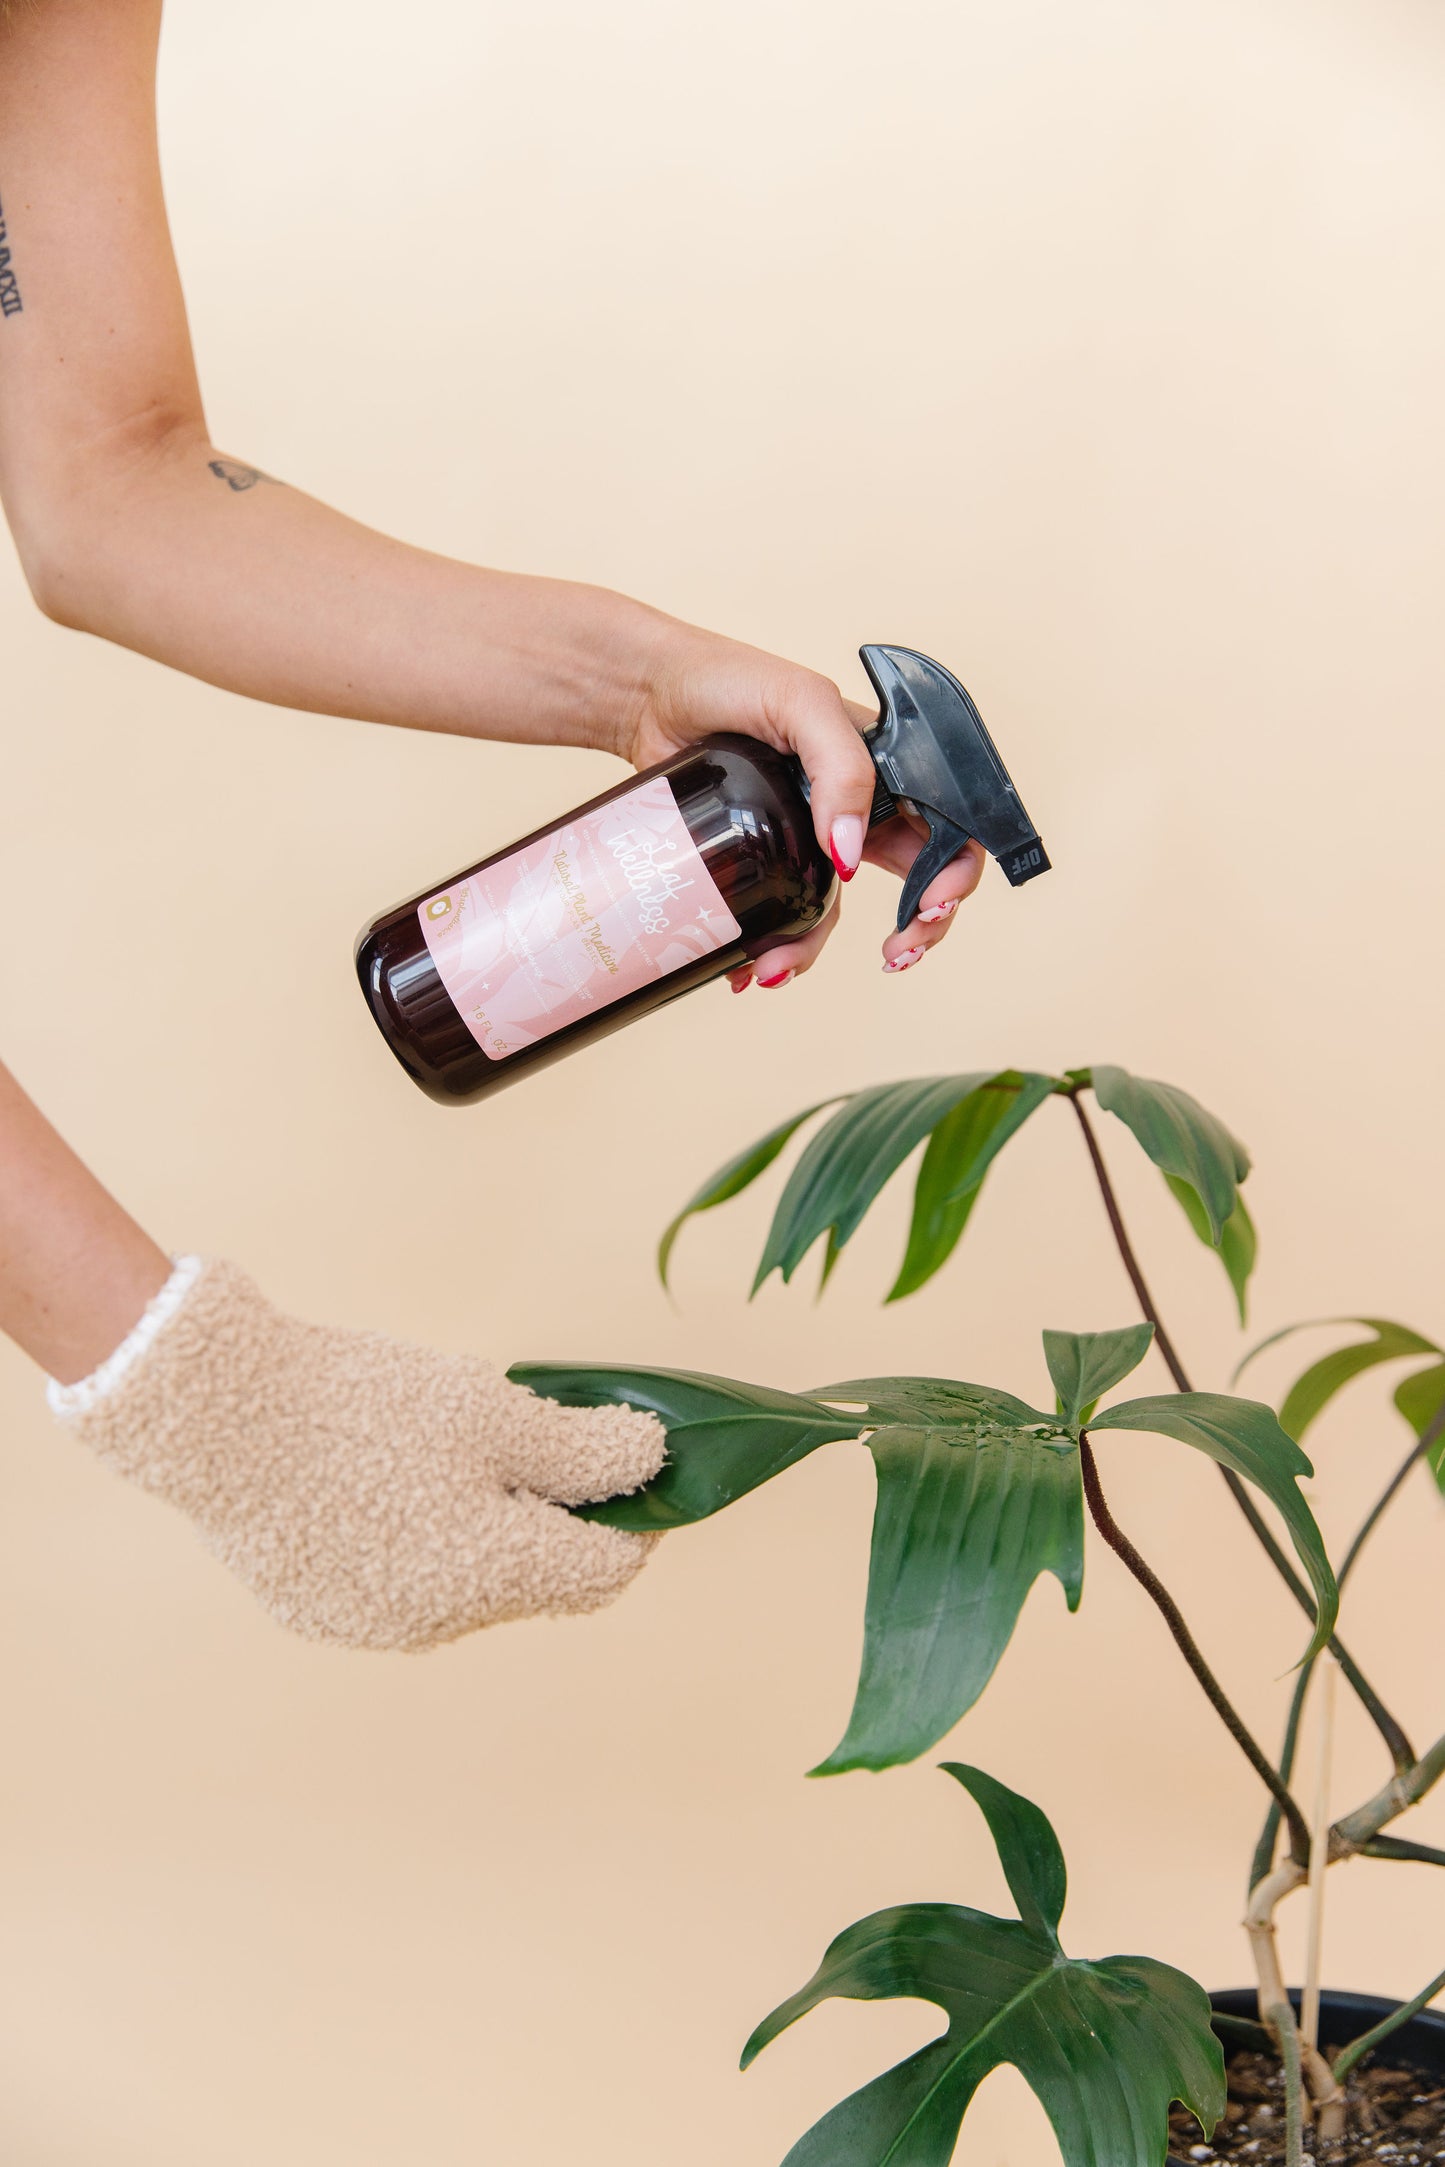 Microfiber dusting gloves for plants - Botanopia USA